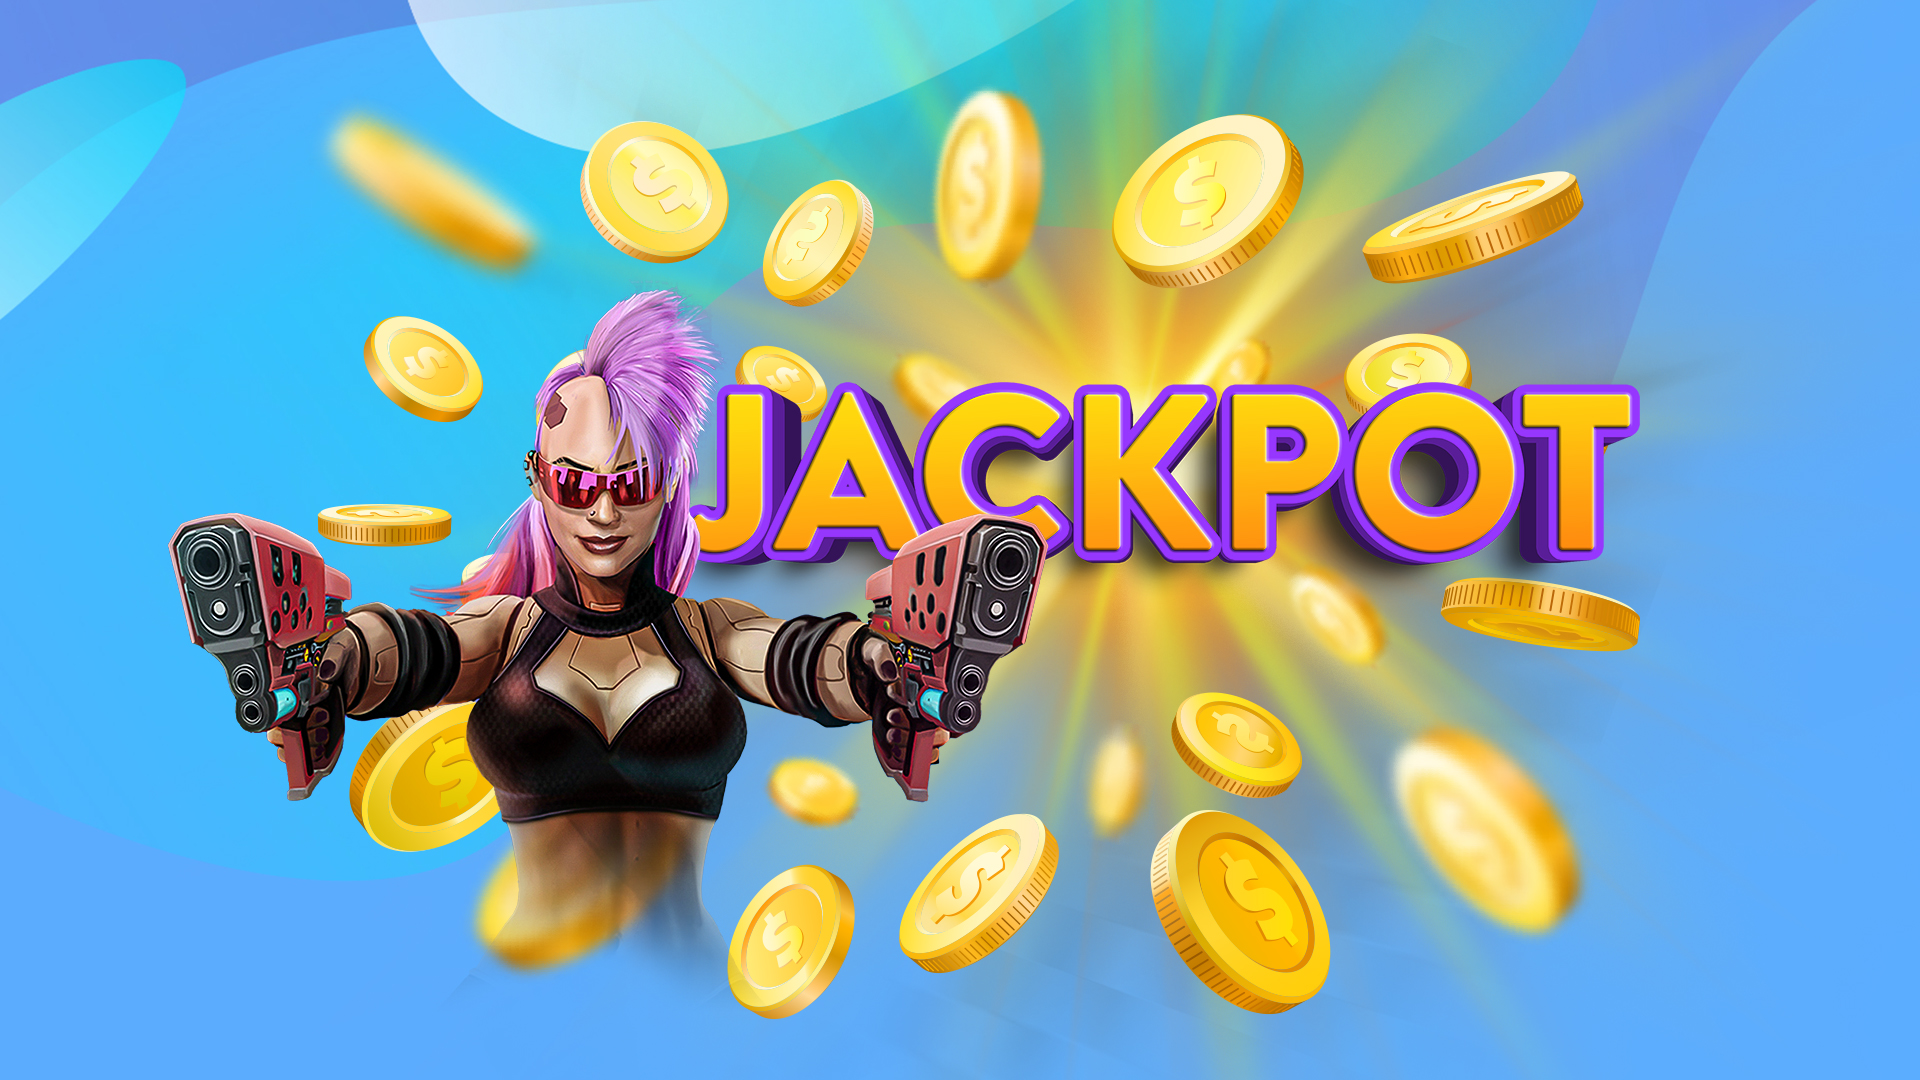 The word Jackpot floats in-between golden coins, adjacent to a 3D cyborg cartoon human with a pink mohawk and a laser gun.